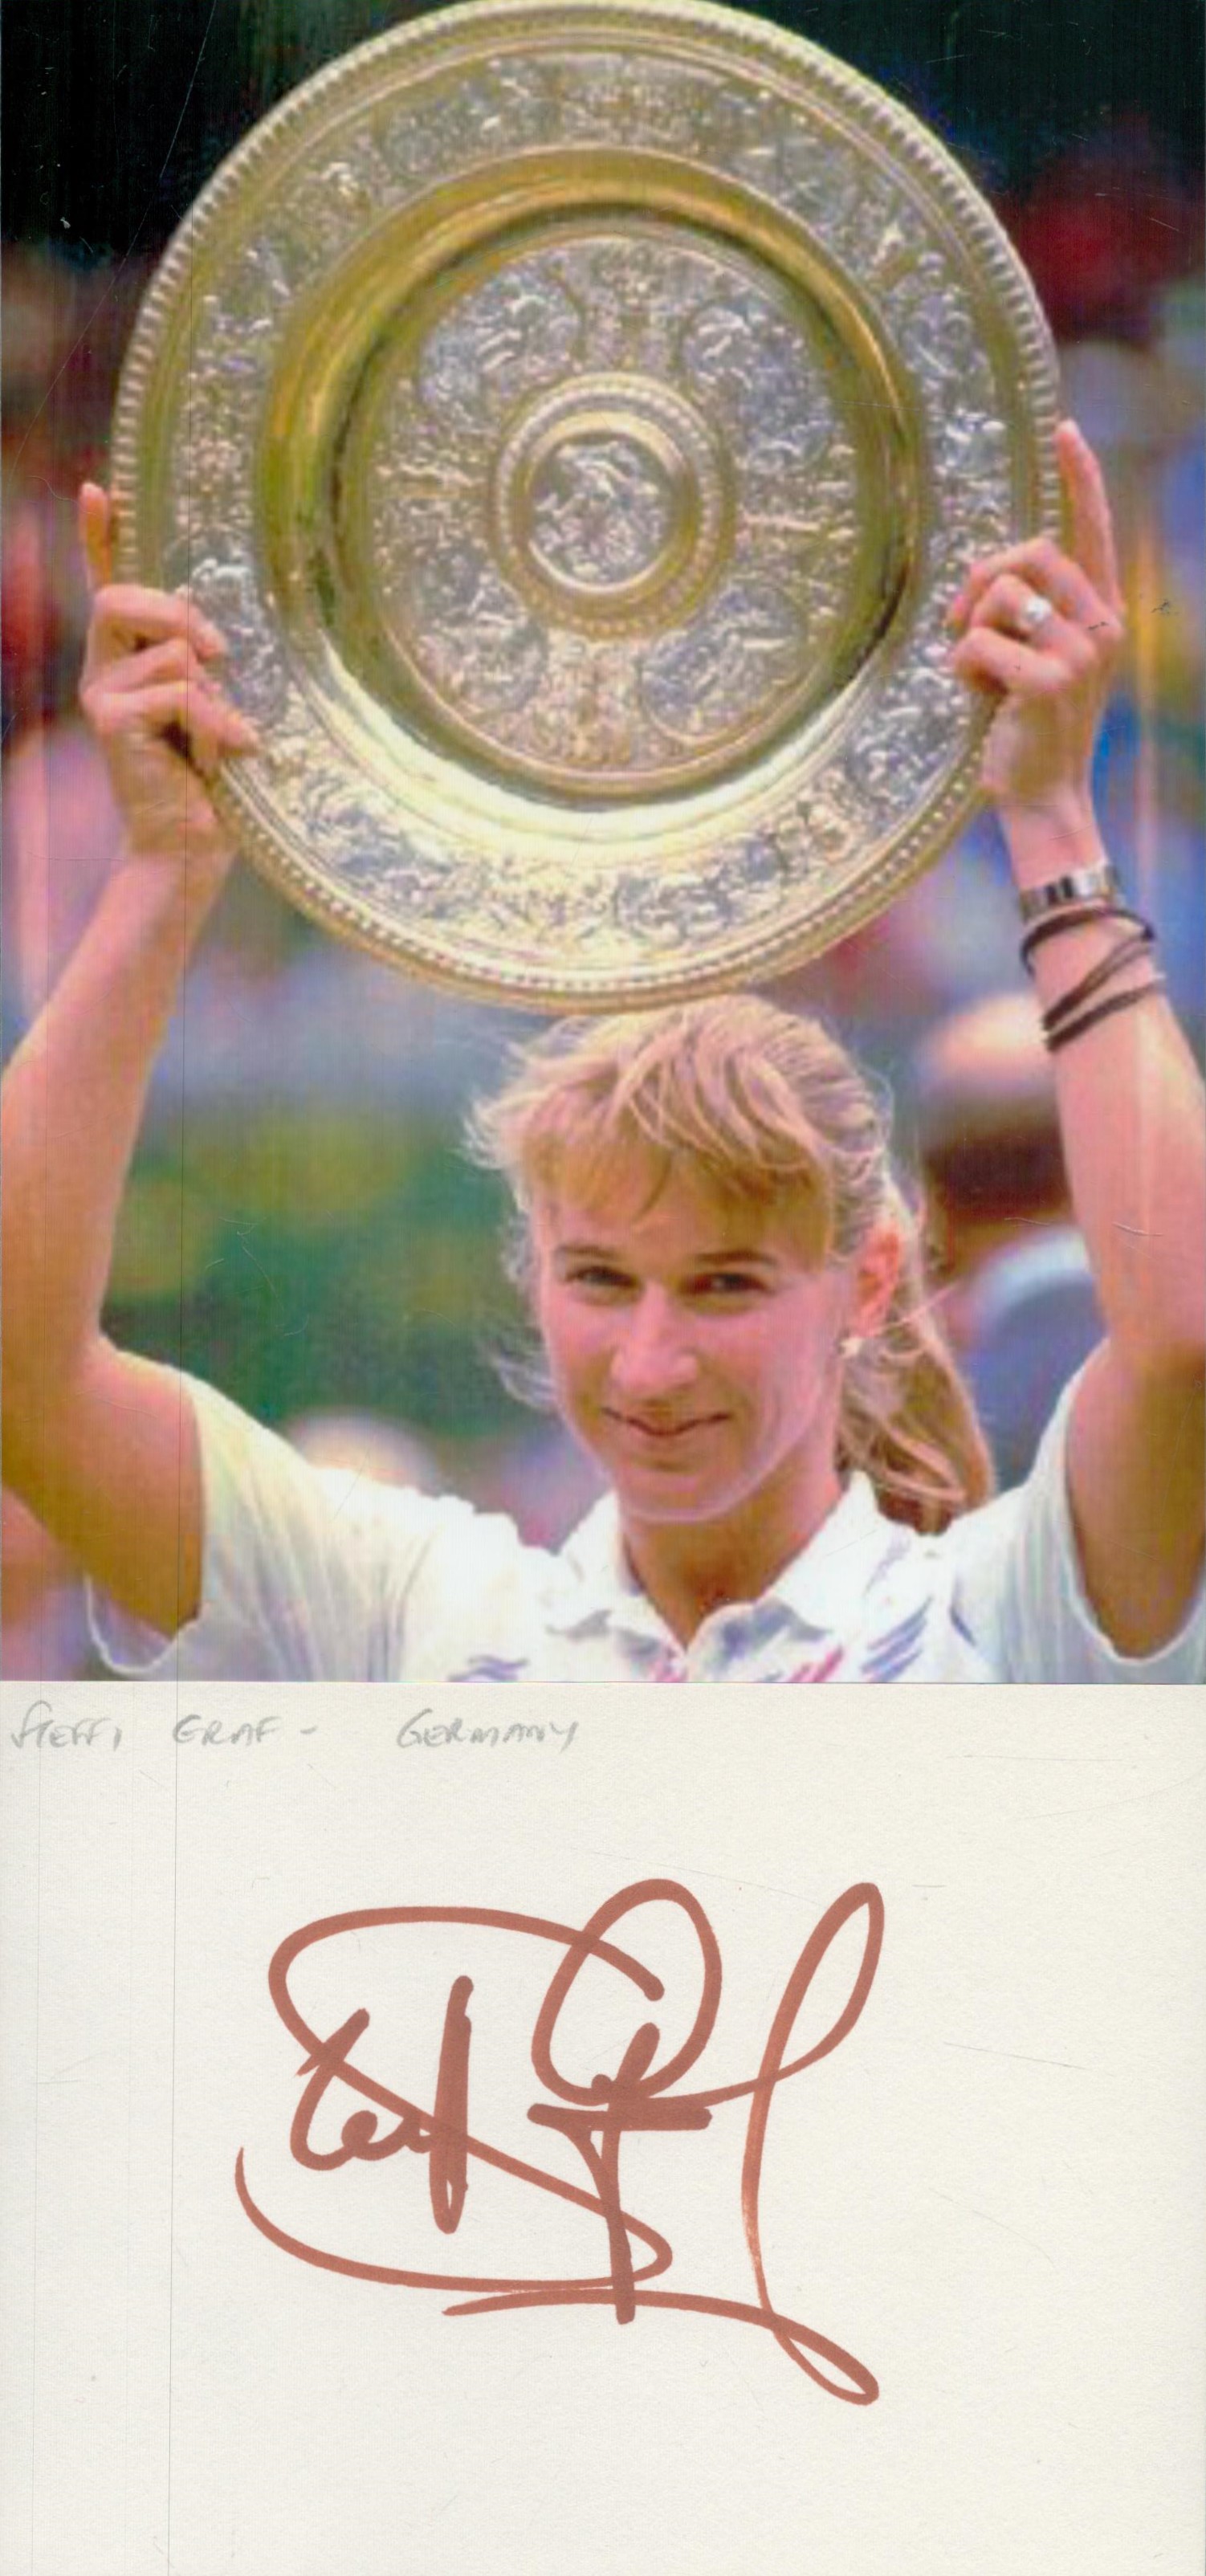 STEFFI GRAF Tennis Legend signed card with Wimbledon Open Photo . Good Condition. All autographs